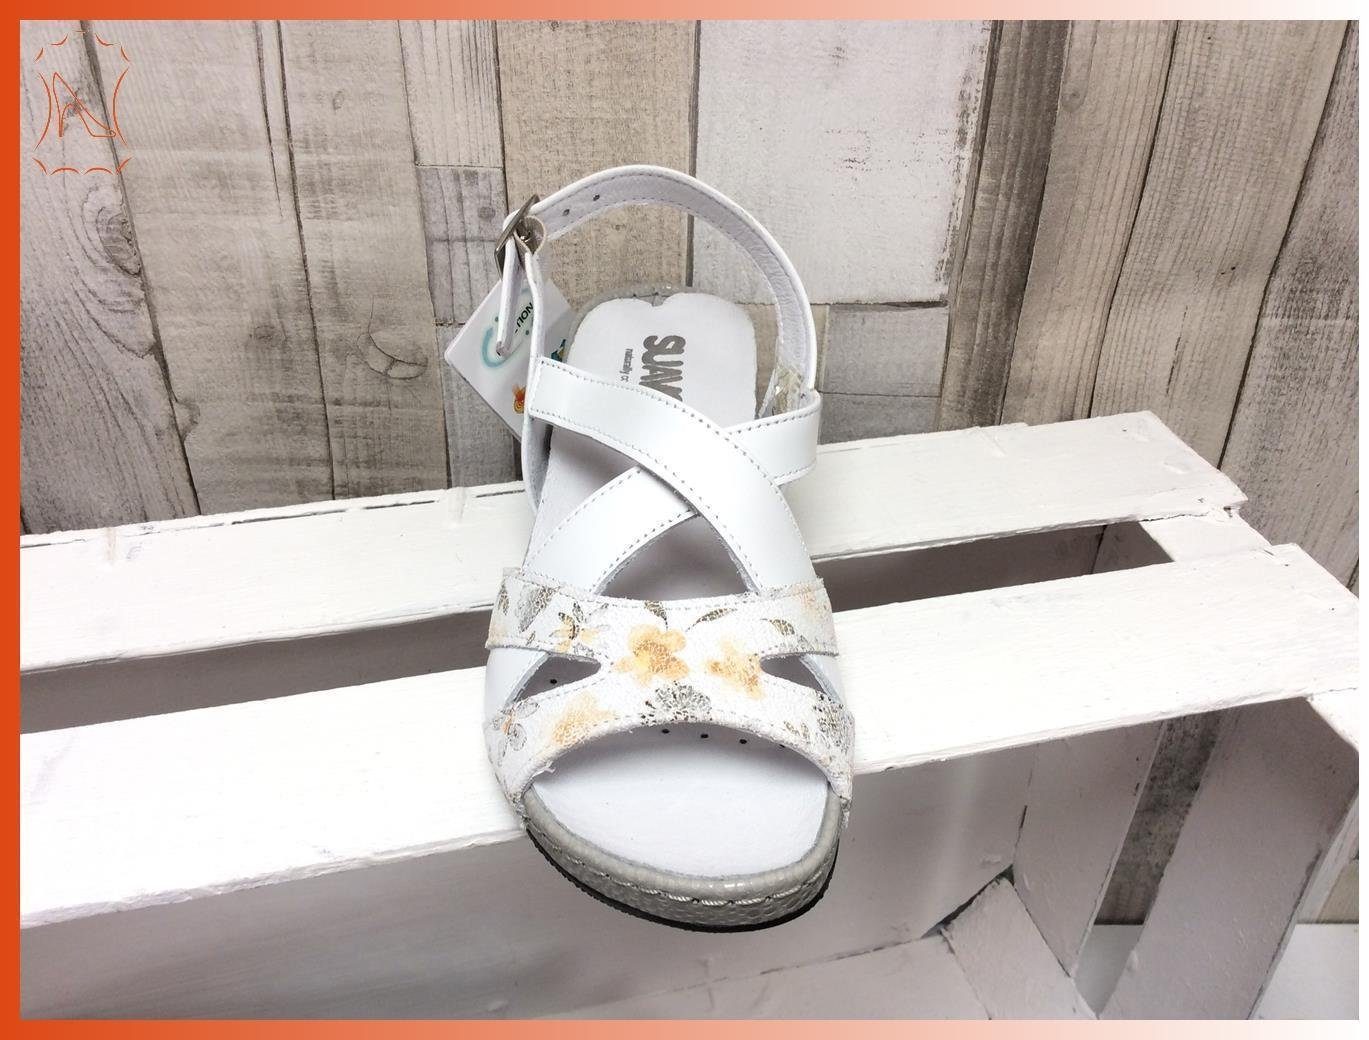 Sandale herausnehmbare cm Sandalette Suave Innensohle, weiß-grau, Absat suave 3,5 Damen